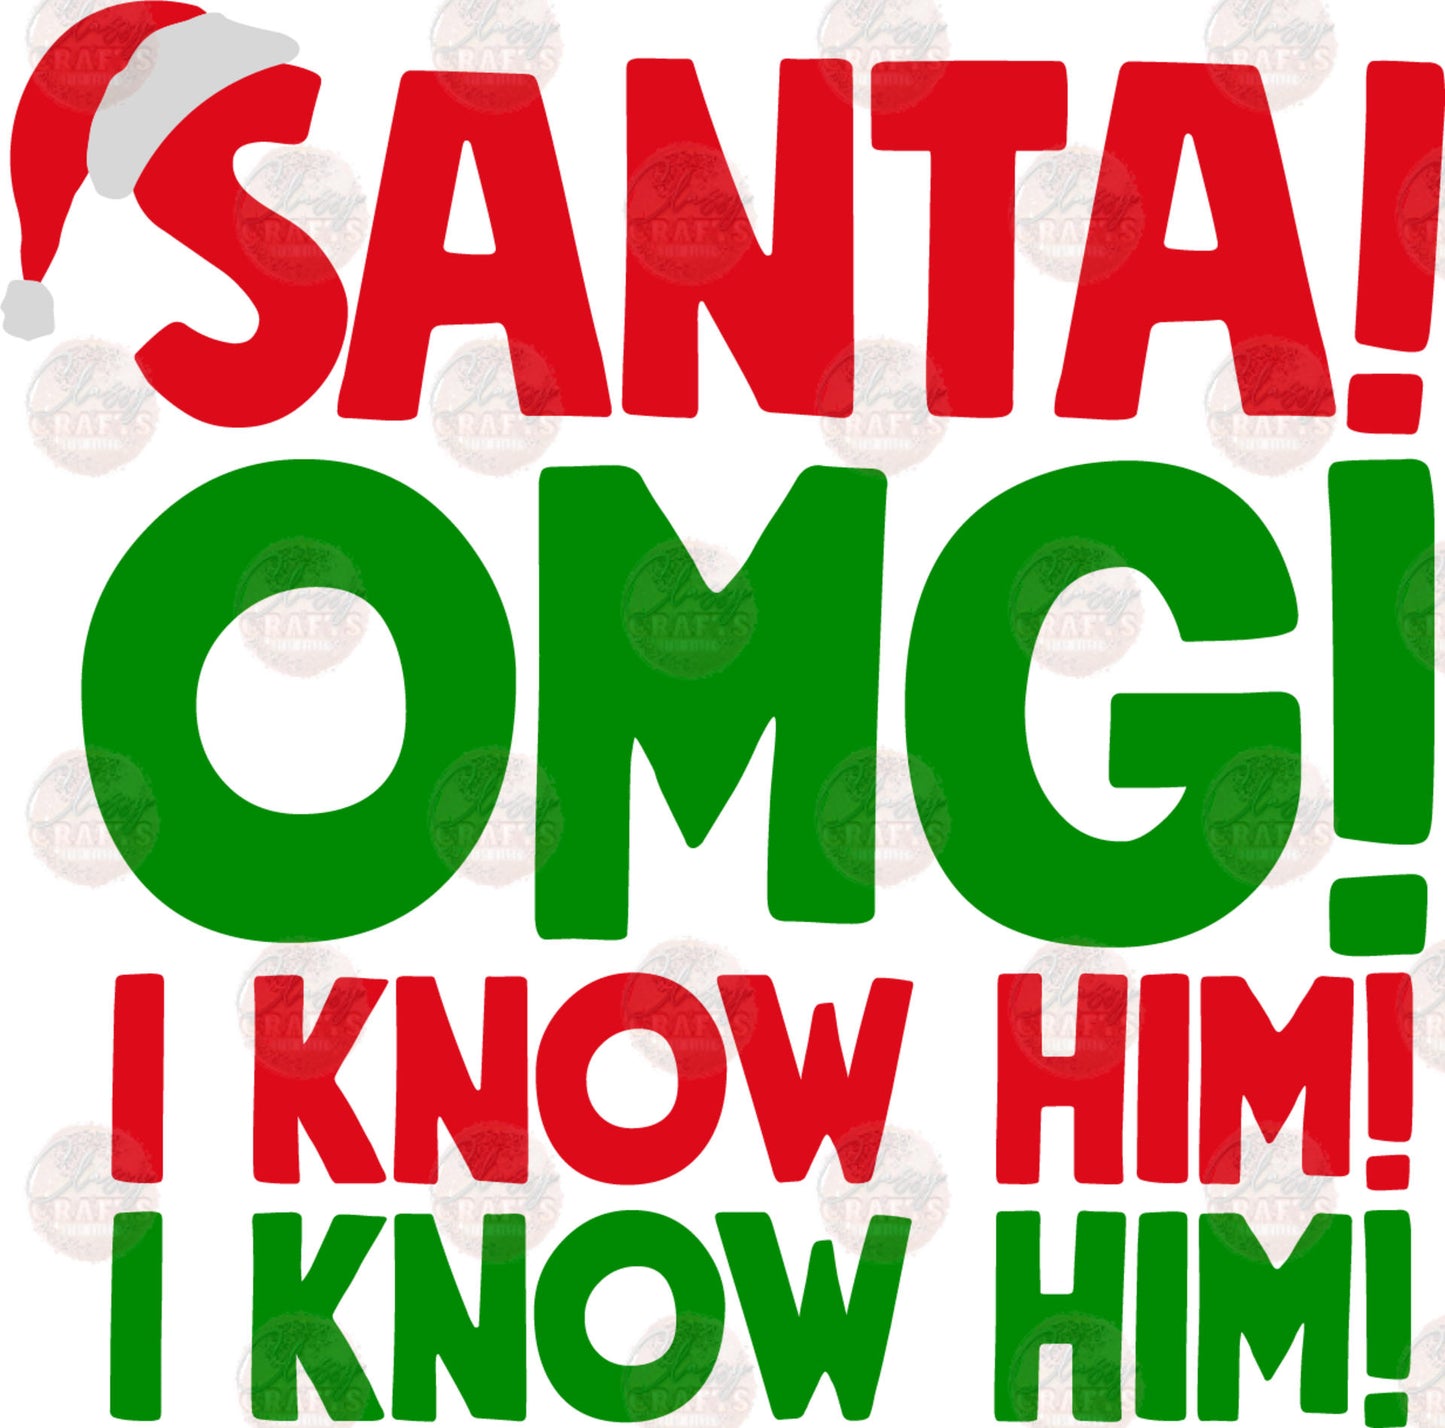 Santa! OMG! - Sublimation Transfer